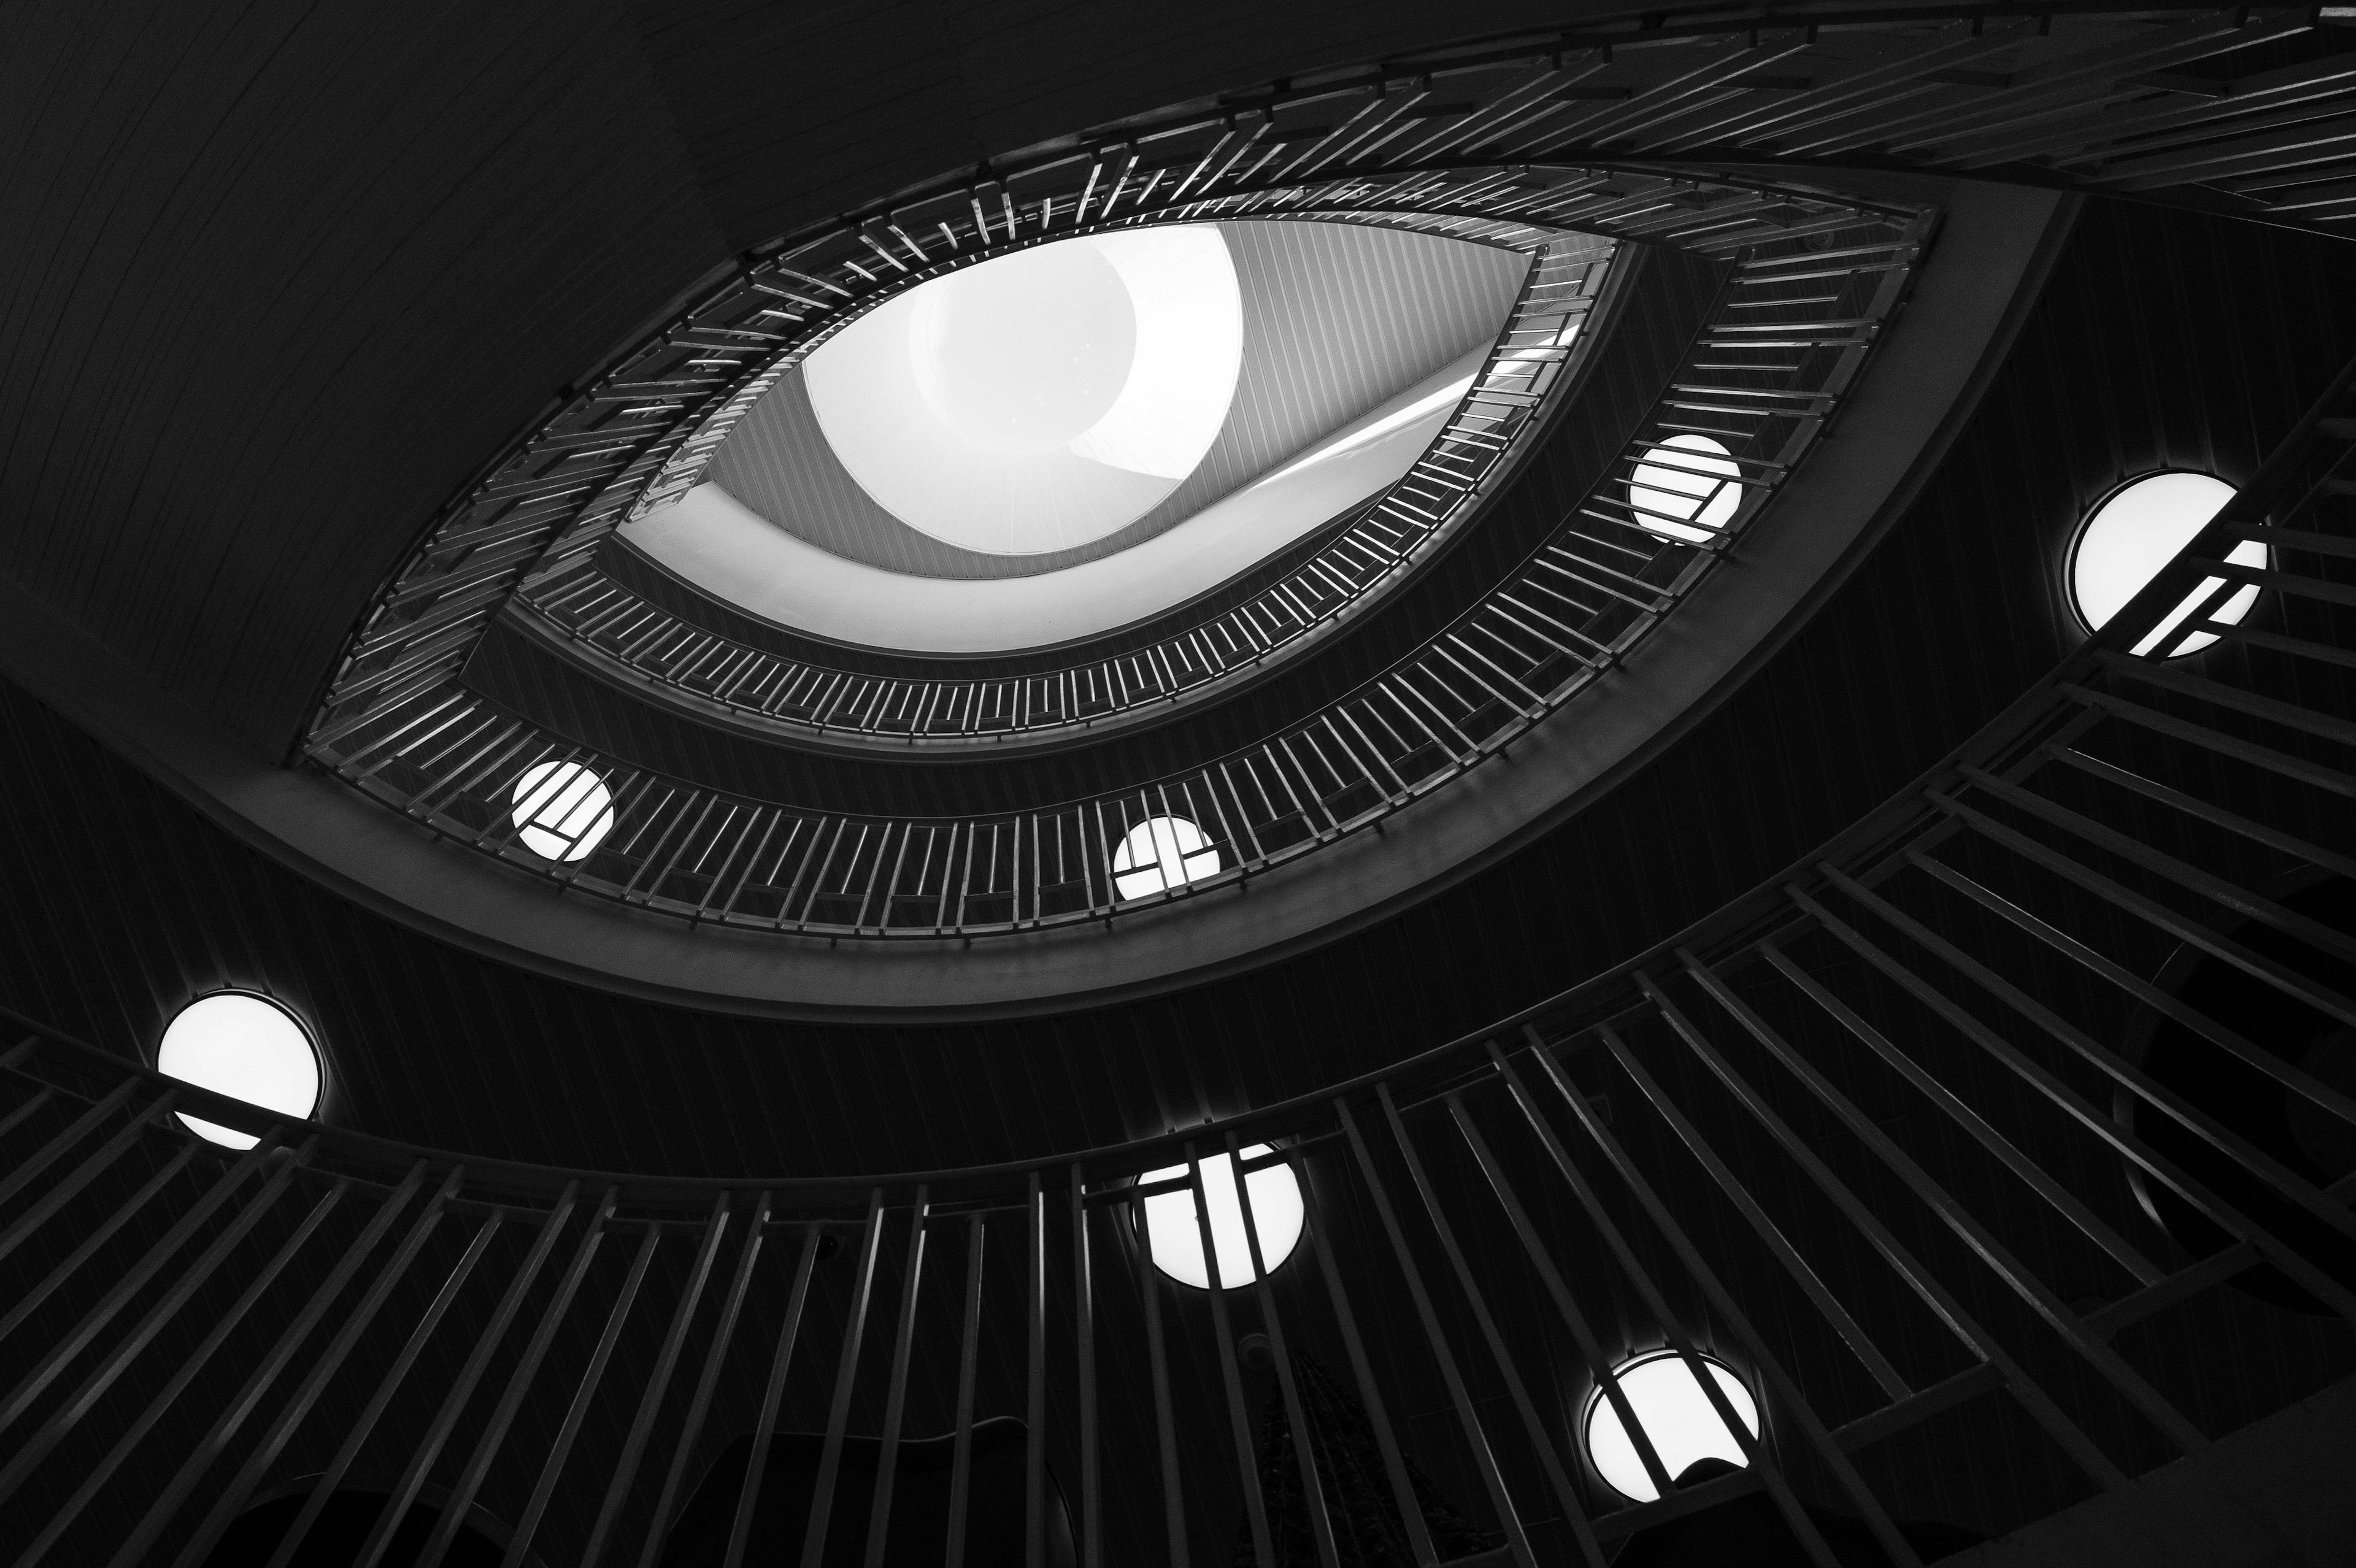 Staircase / eye in library — Photo by Petri Heiskanen